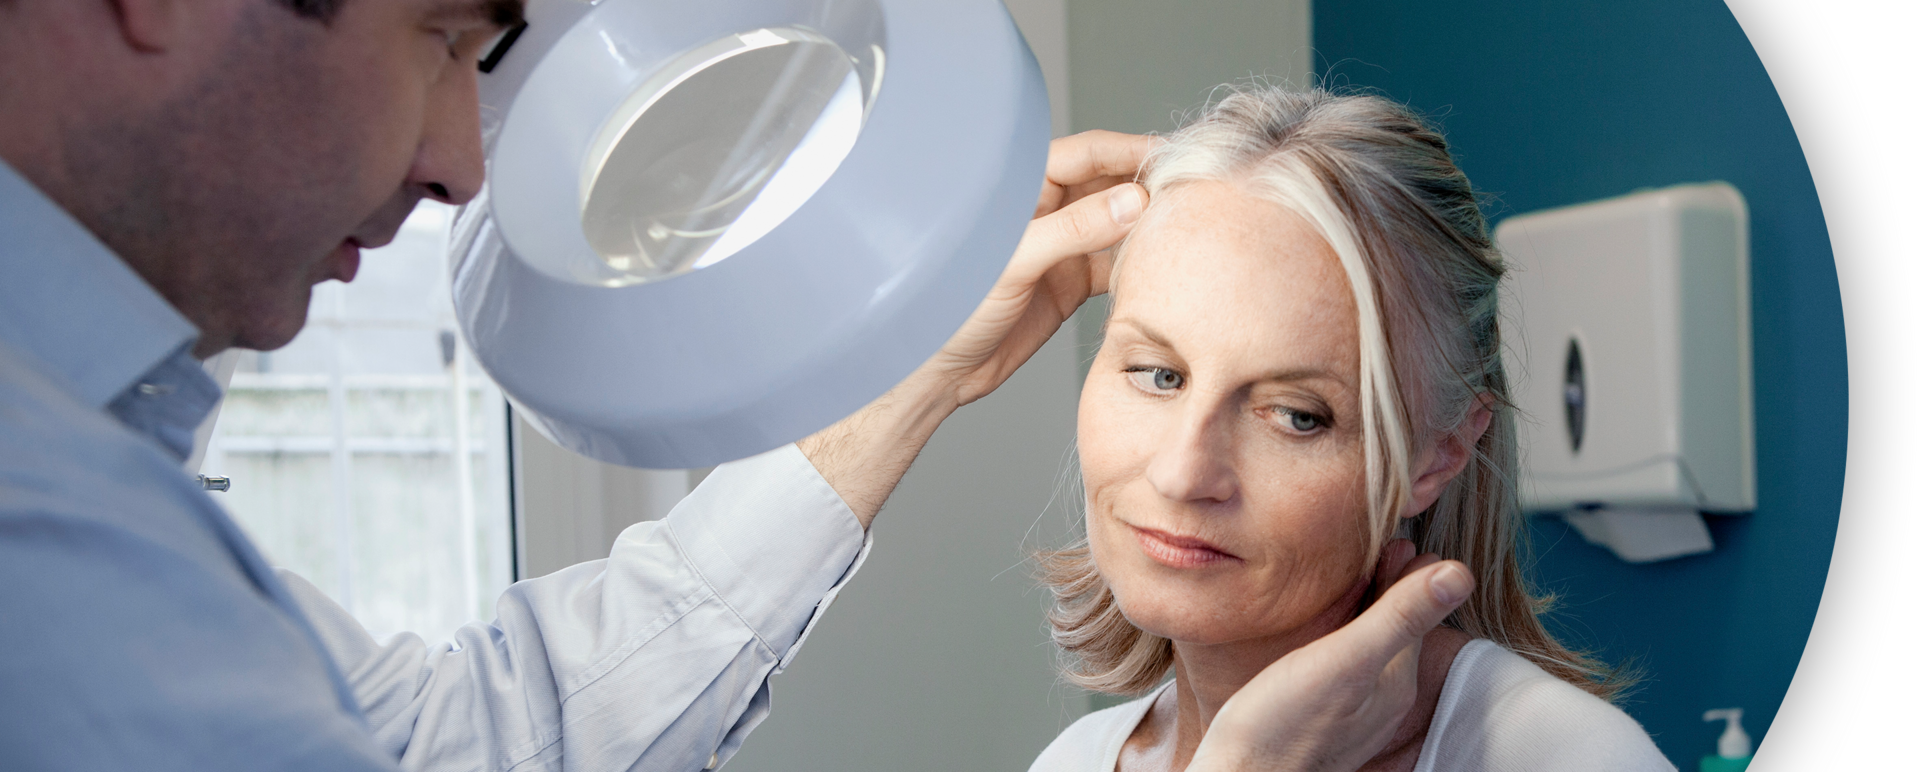 Male physician examining an older woman's face through a magnifier